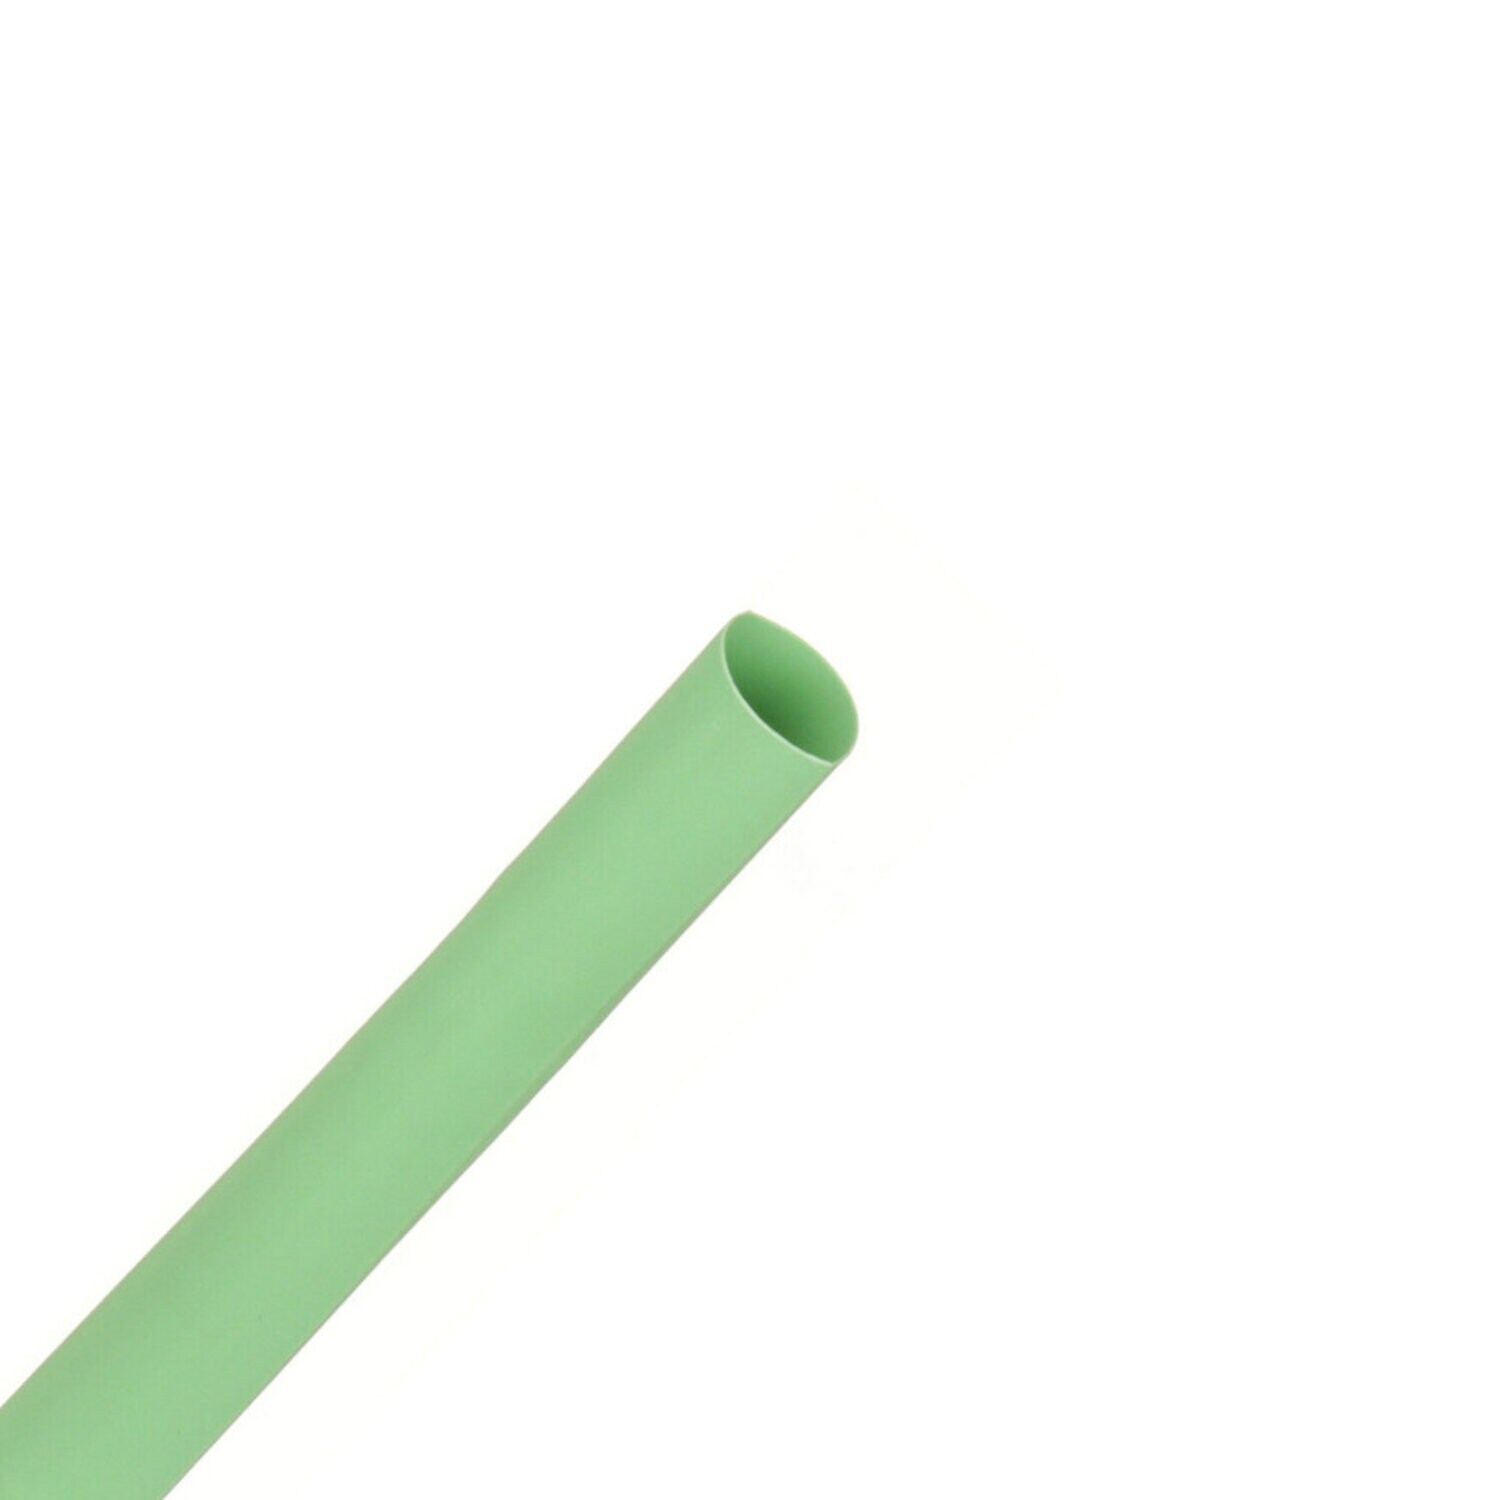 7100019711 - 3M Heat Shrink Thin-Wall Tubing FP-301-1-Green-100`: 100 ft spool
length, 300 ft/box, 3 Rolls/Case